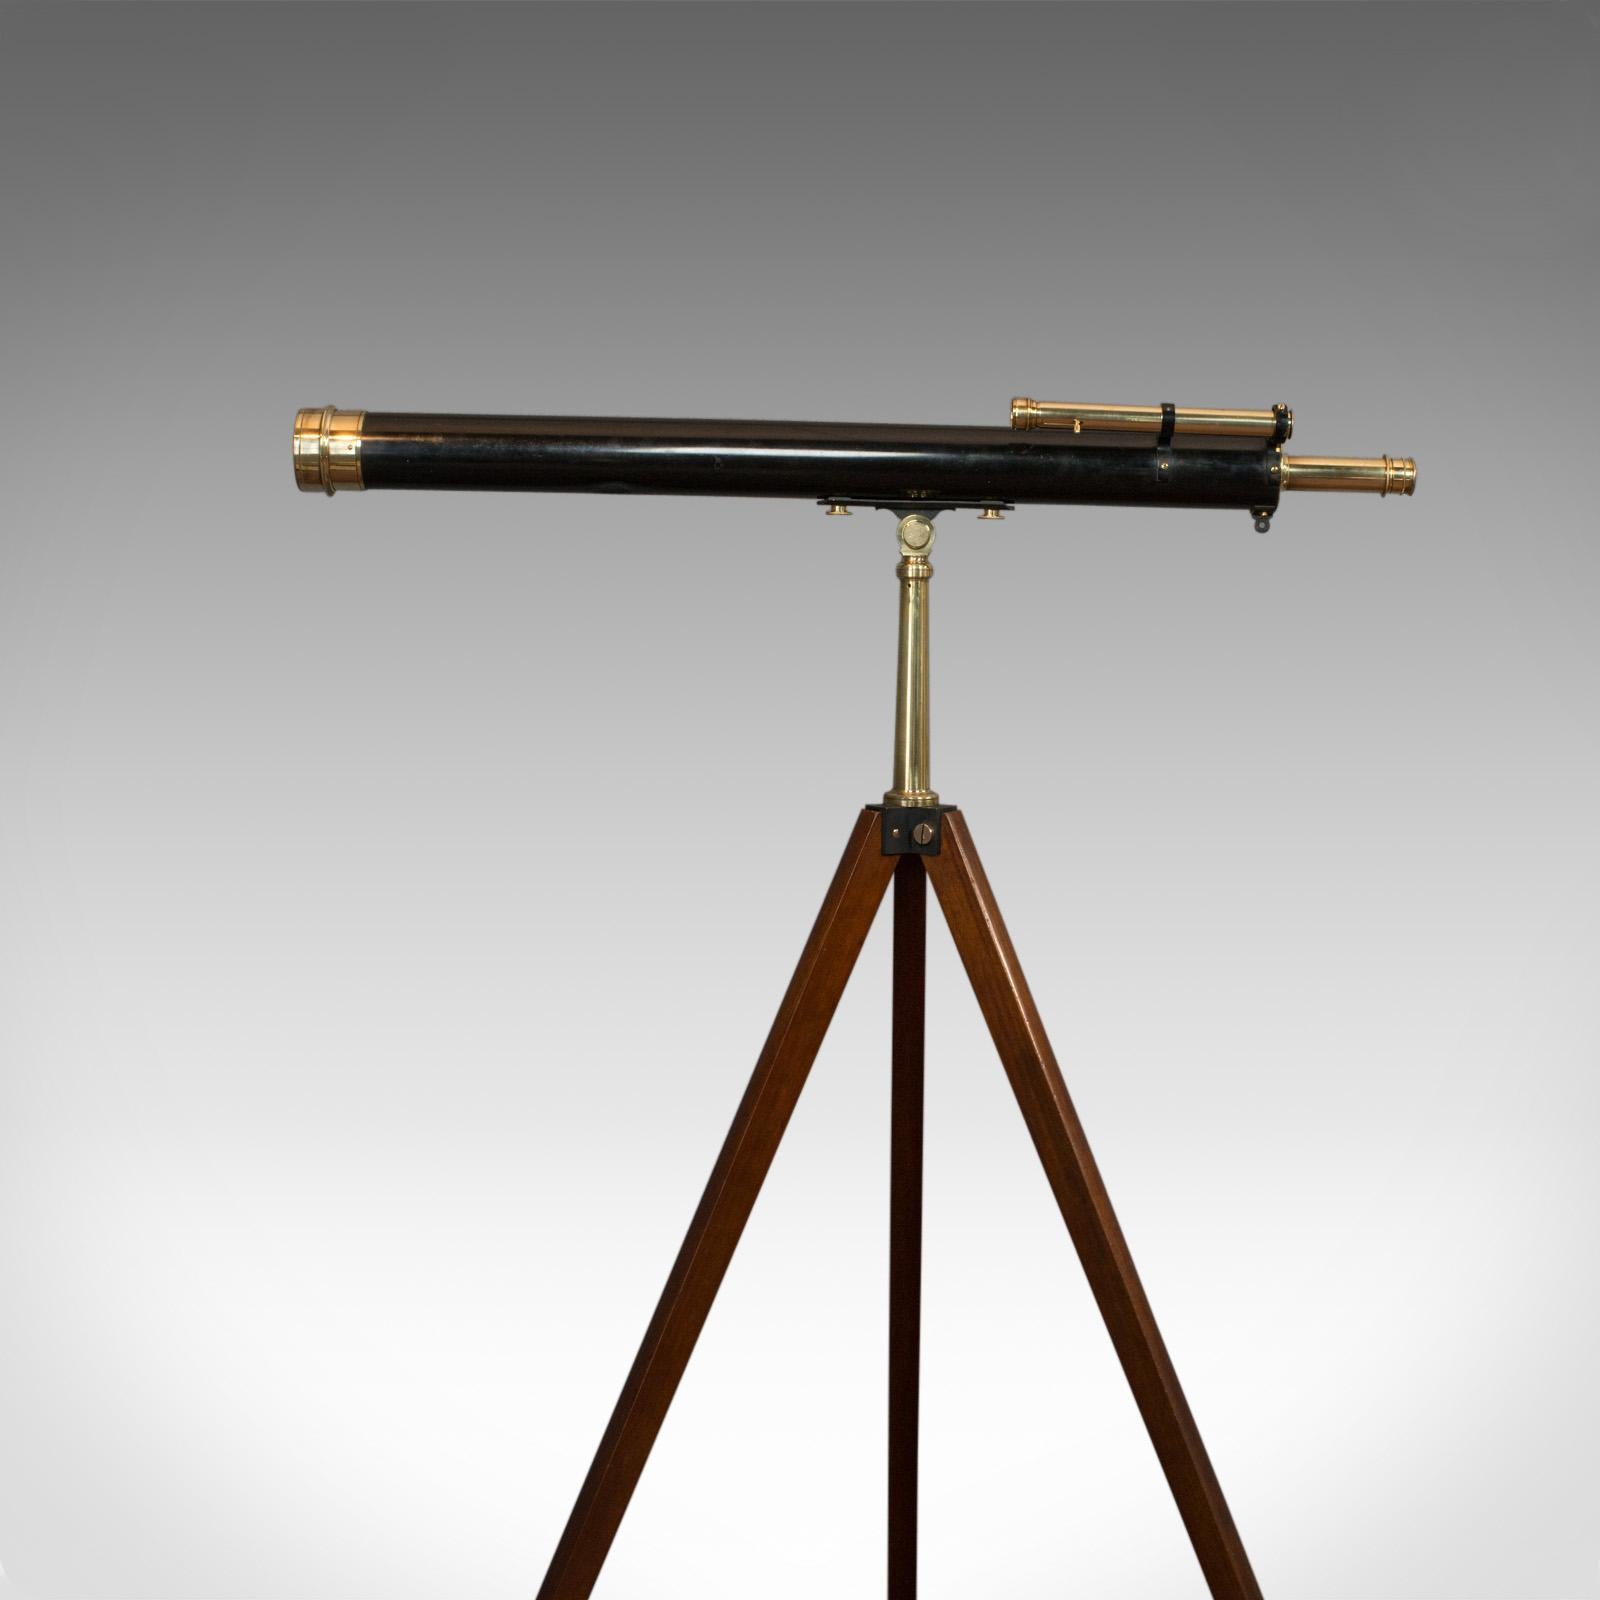 Brass Vintage Telescope, Tripod, Broadhurst Clarkson, London, Starboy, Astronomical